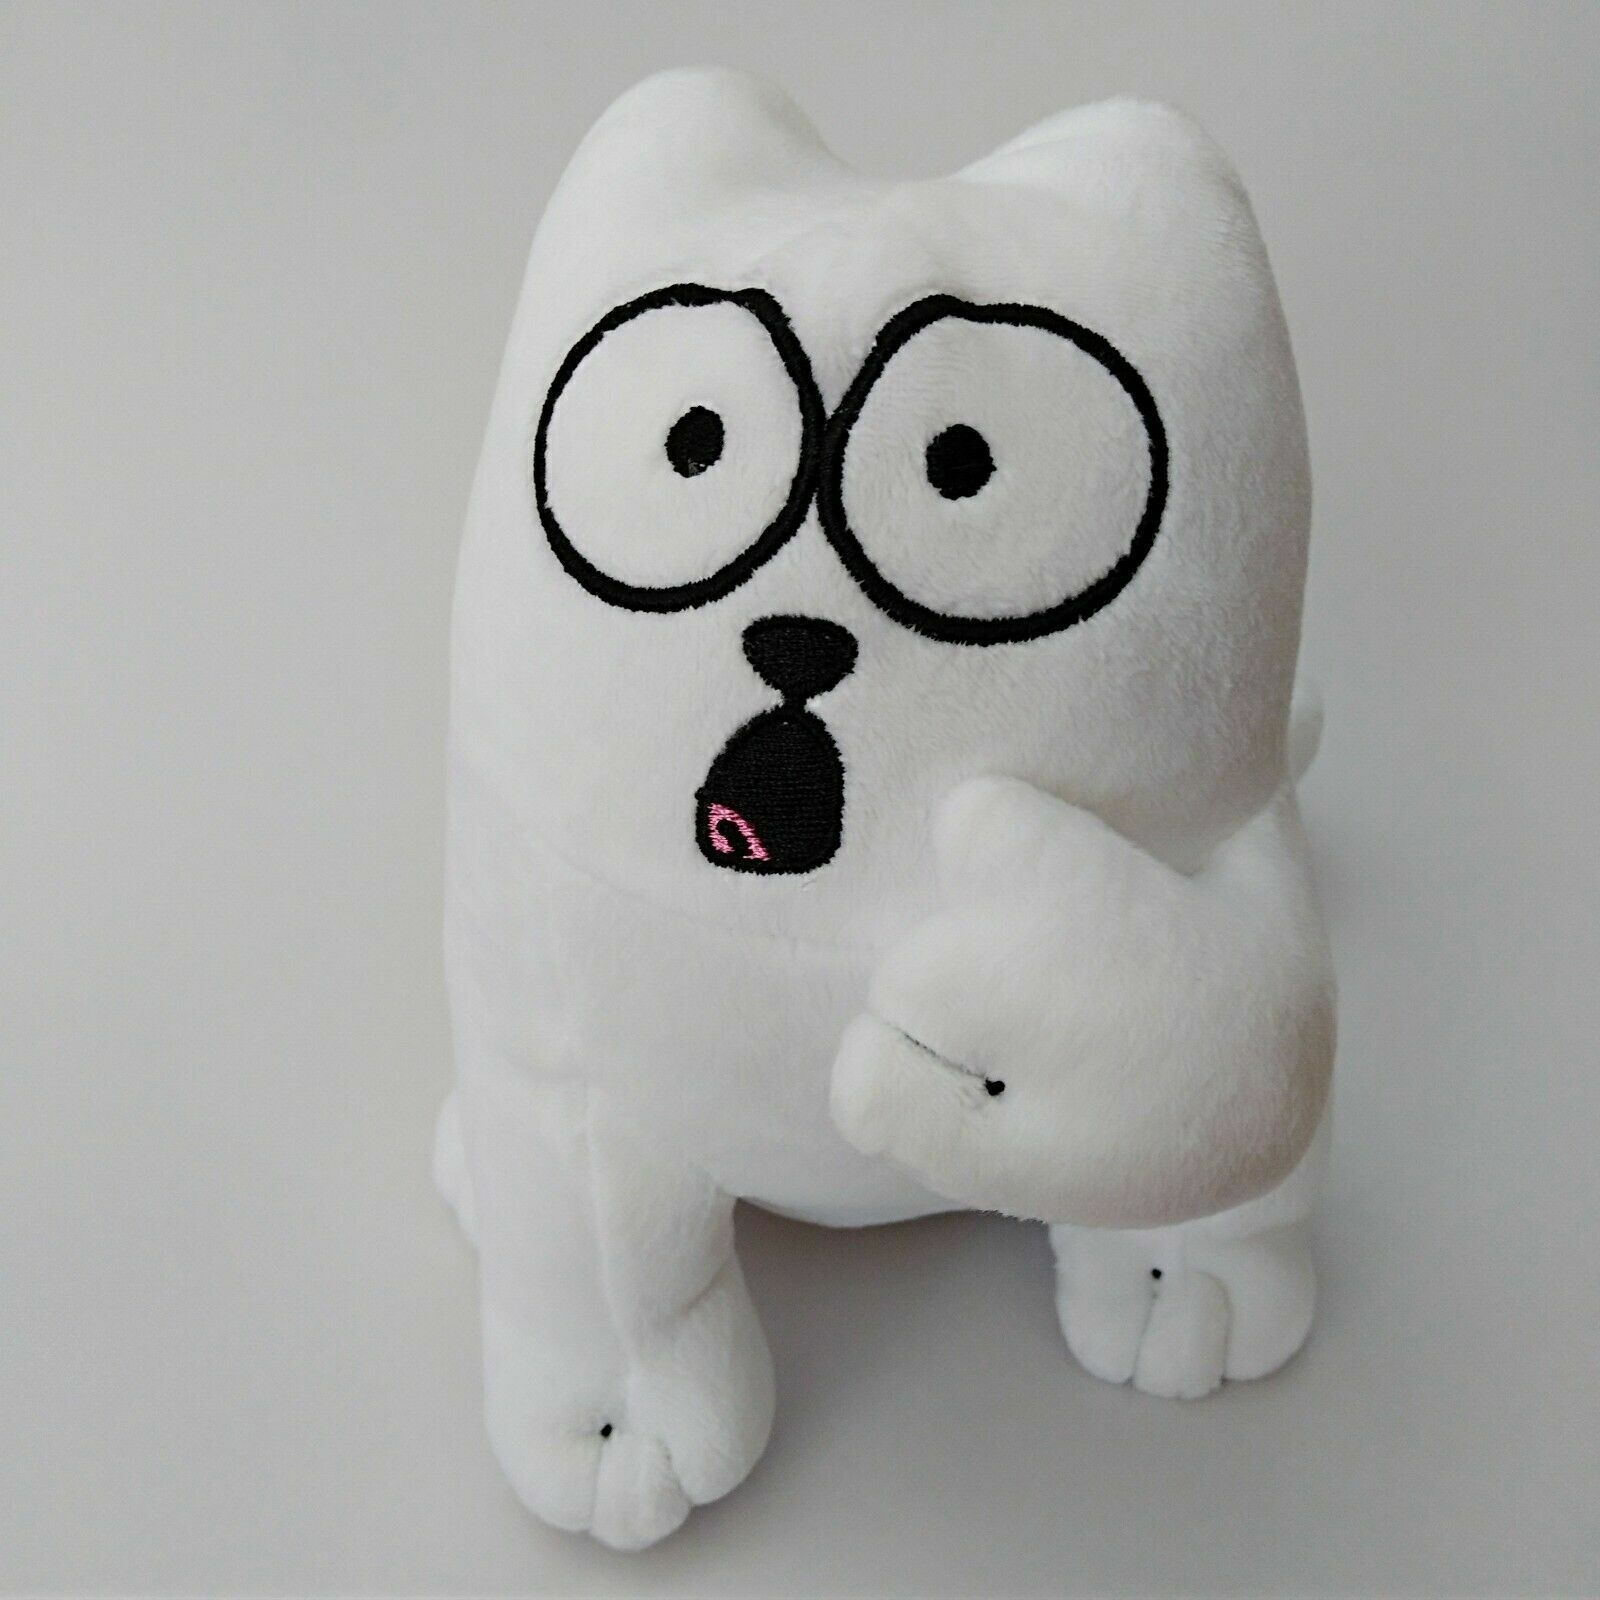 New 20 cm Simon’s cat toy plush cartoon character plush toy children about 8 inc